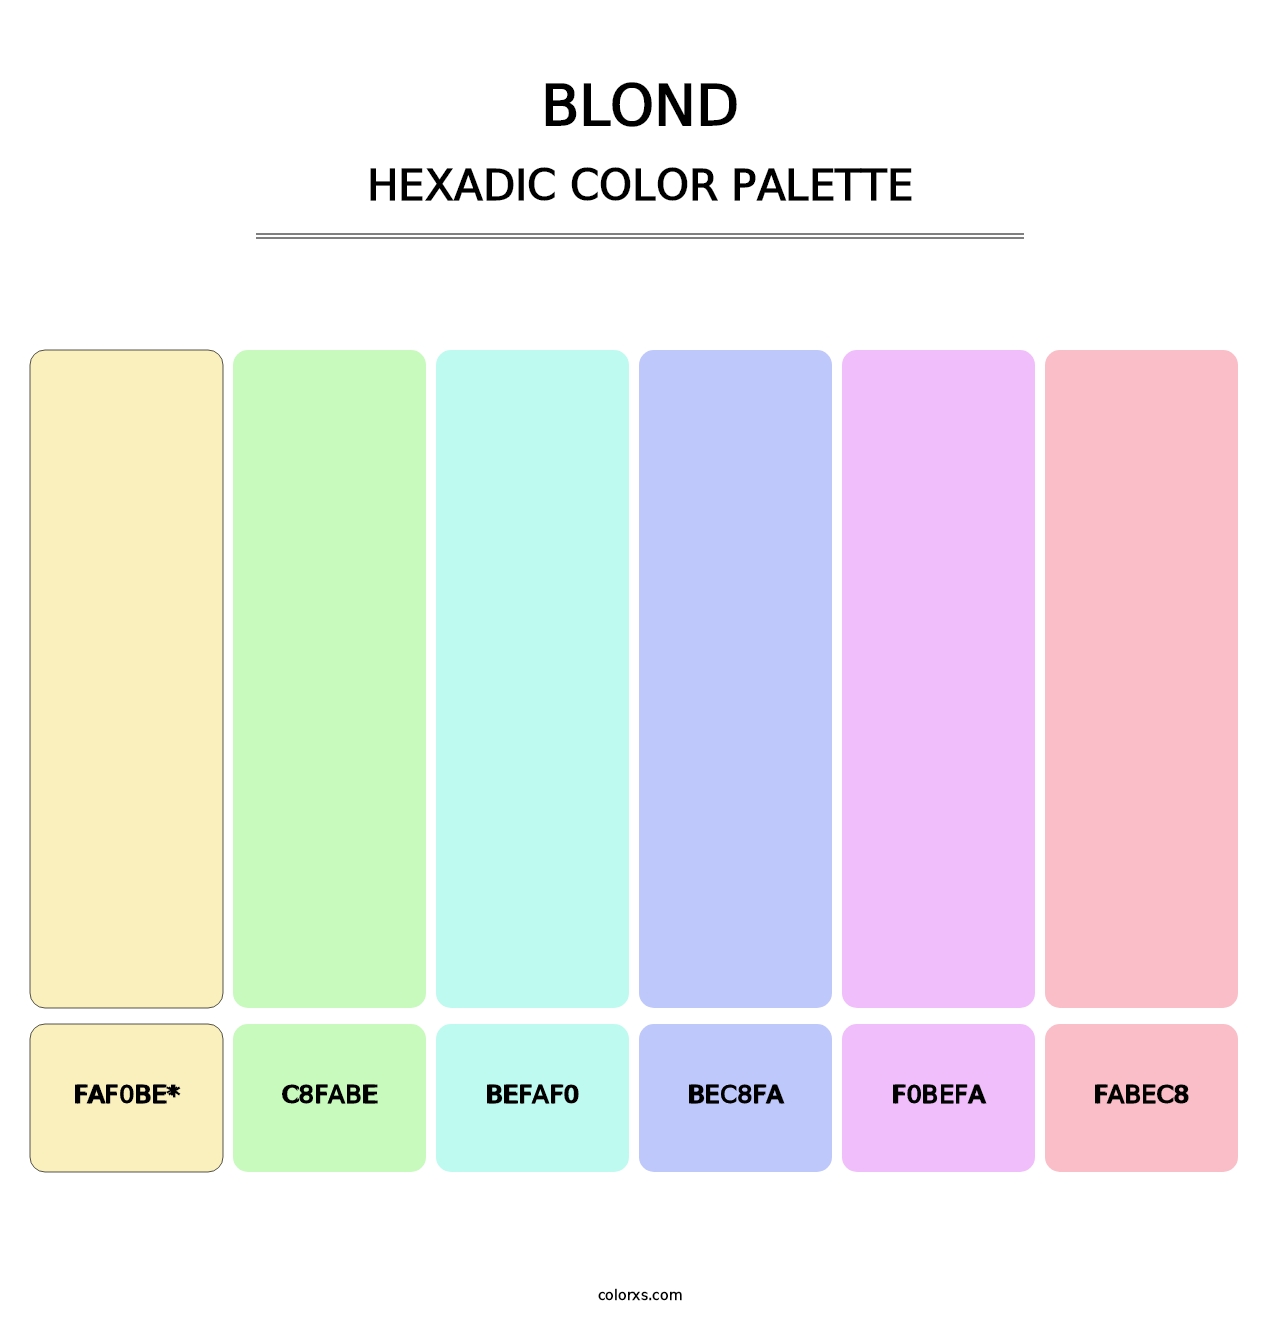 Blond - Hexadic Color Palette